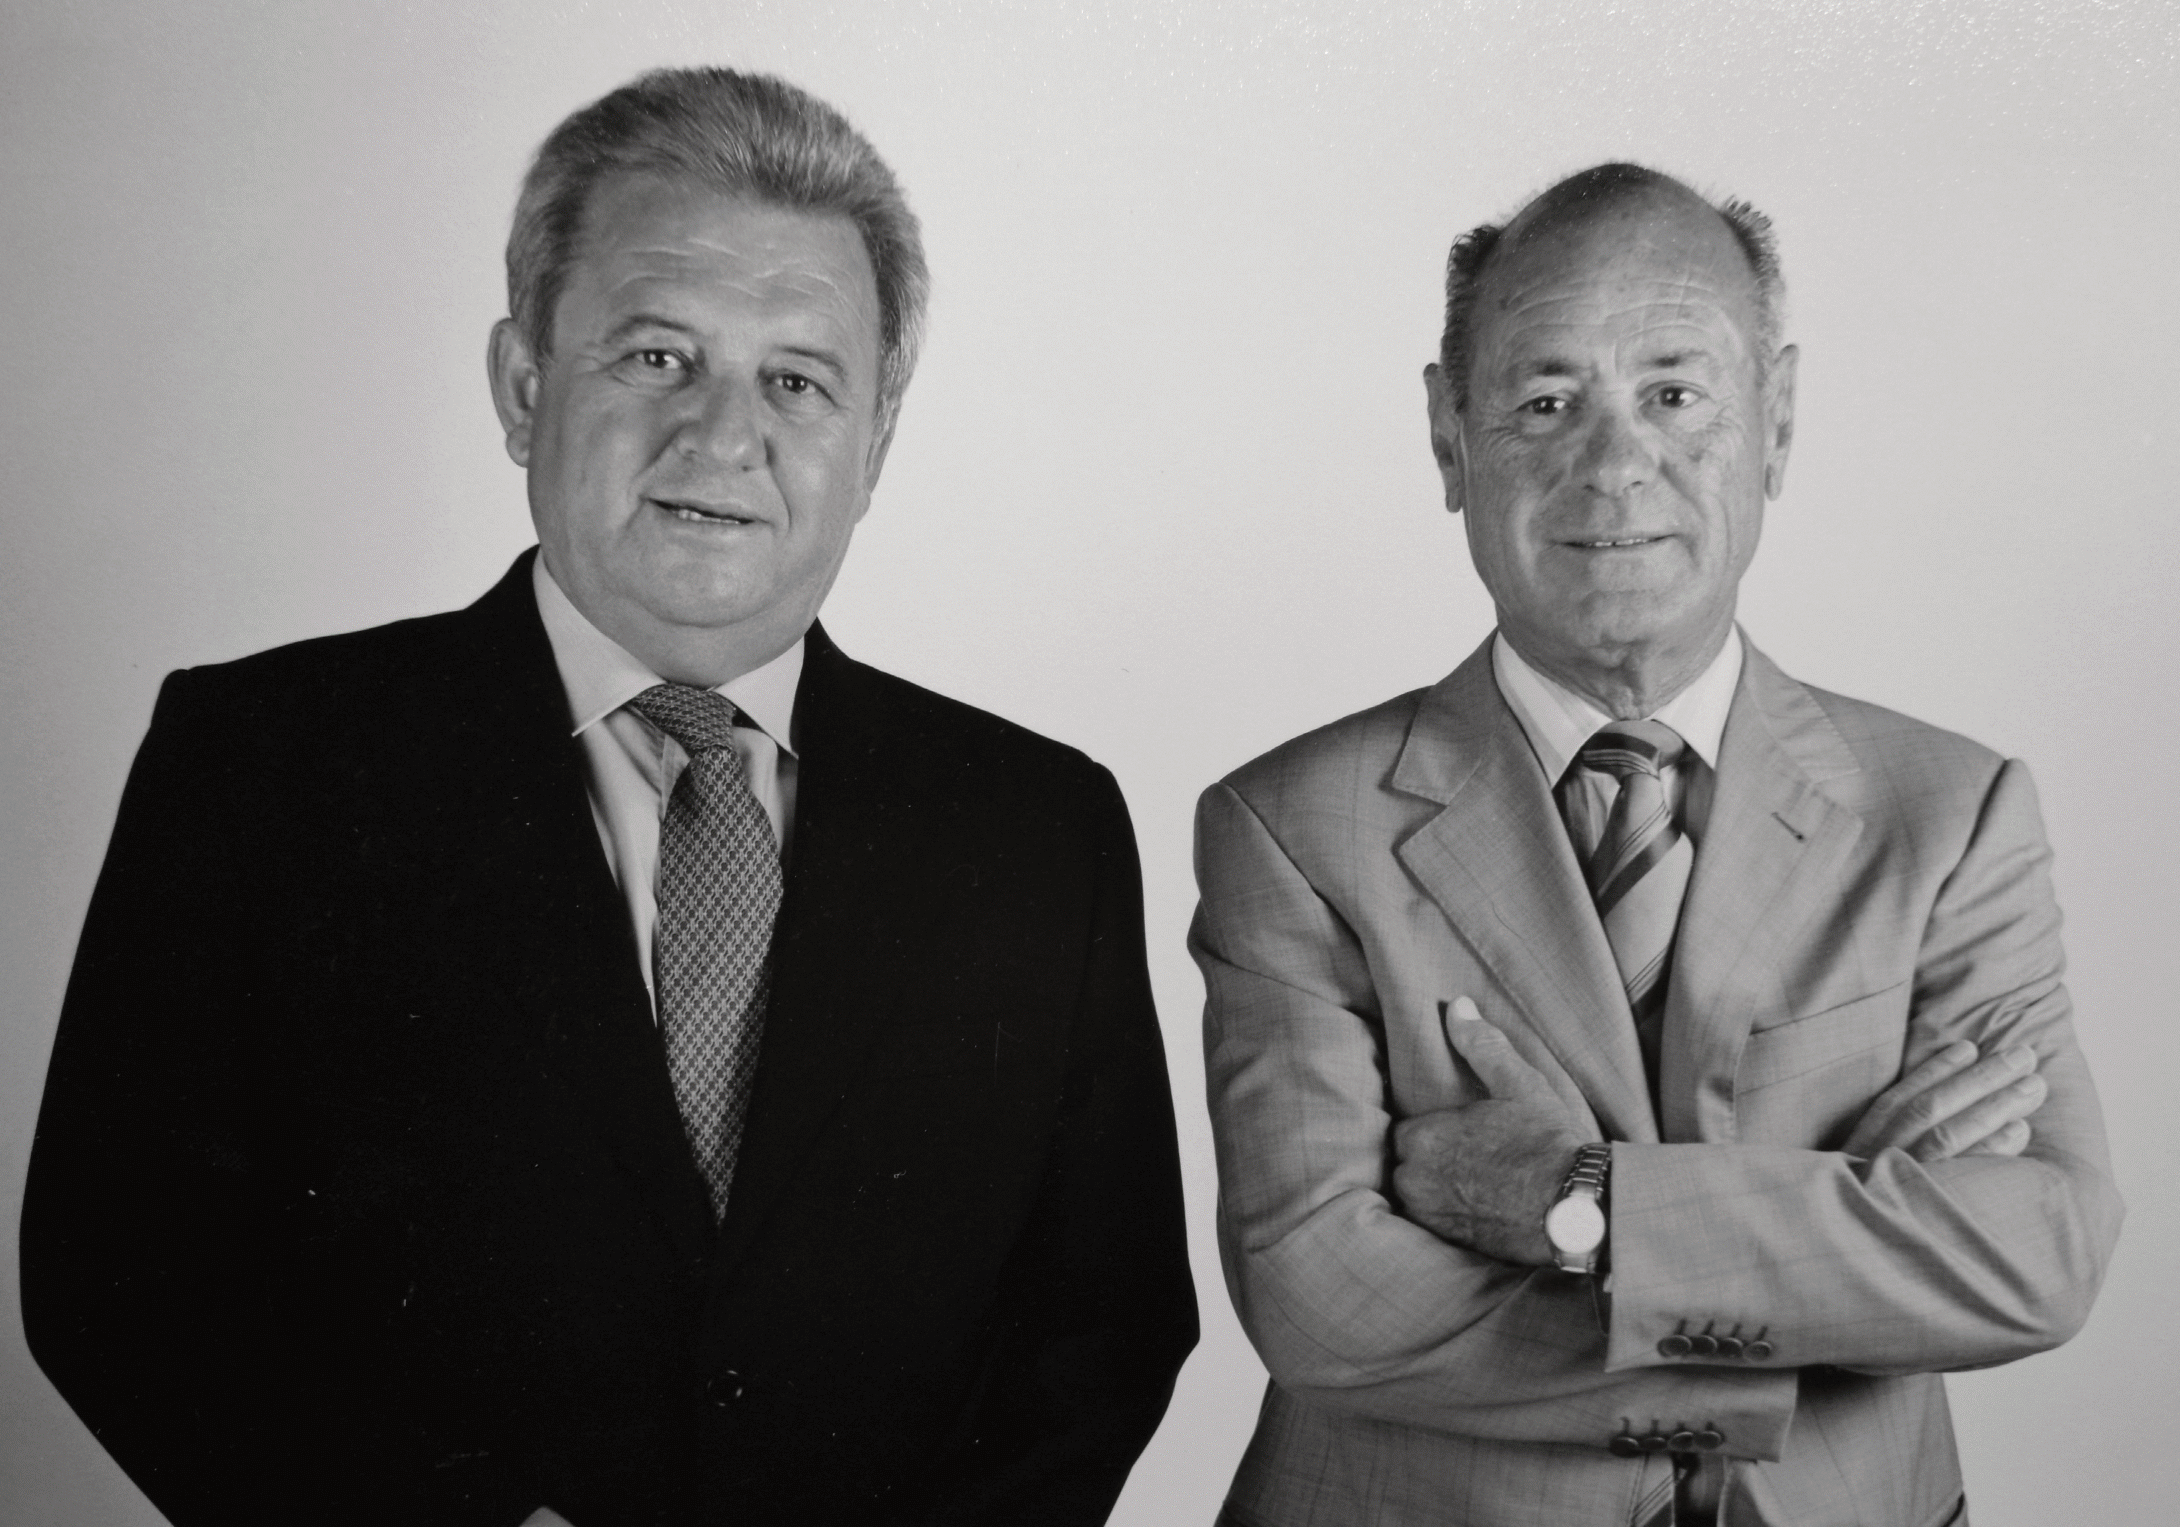 Pepe Fur and Paco Gómez, founders of Alannia Resorts